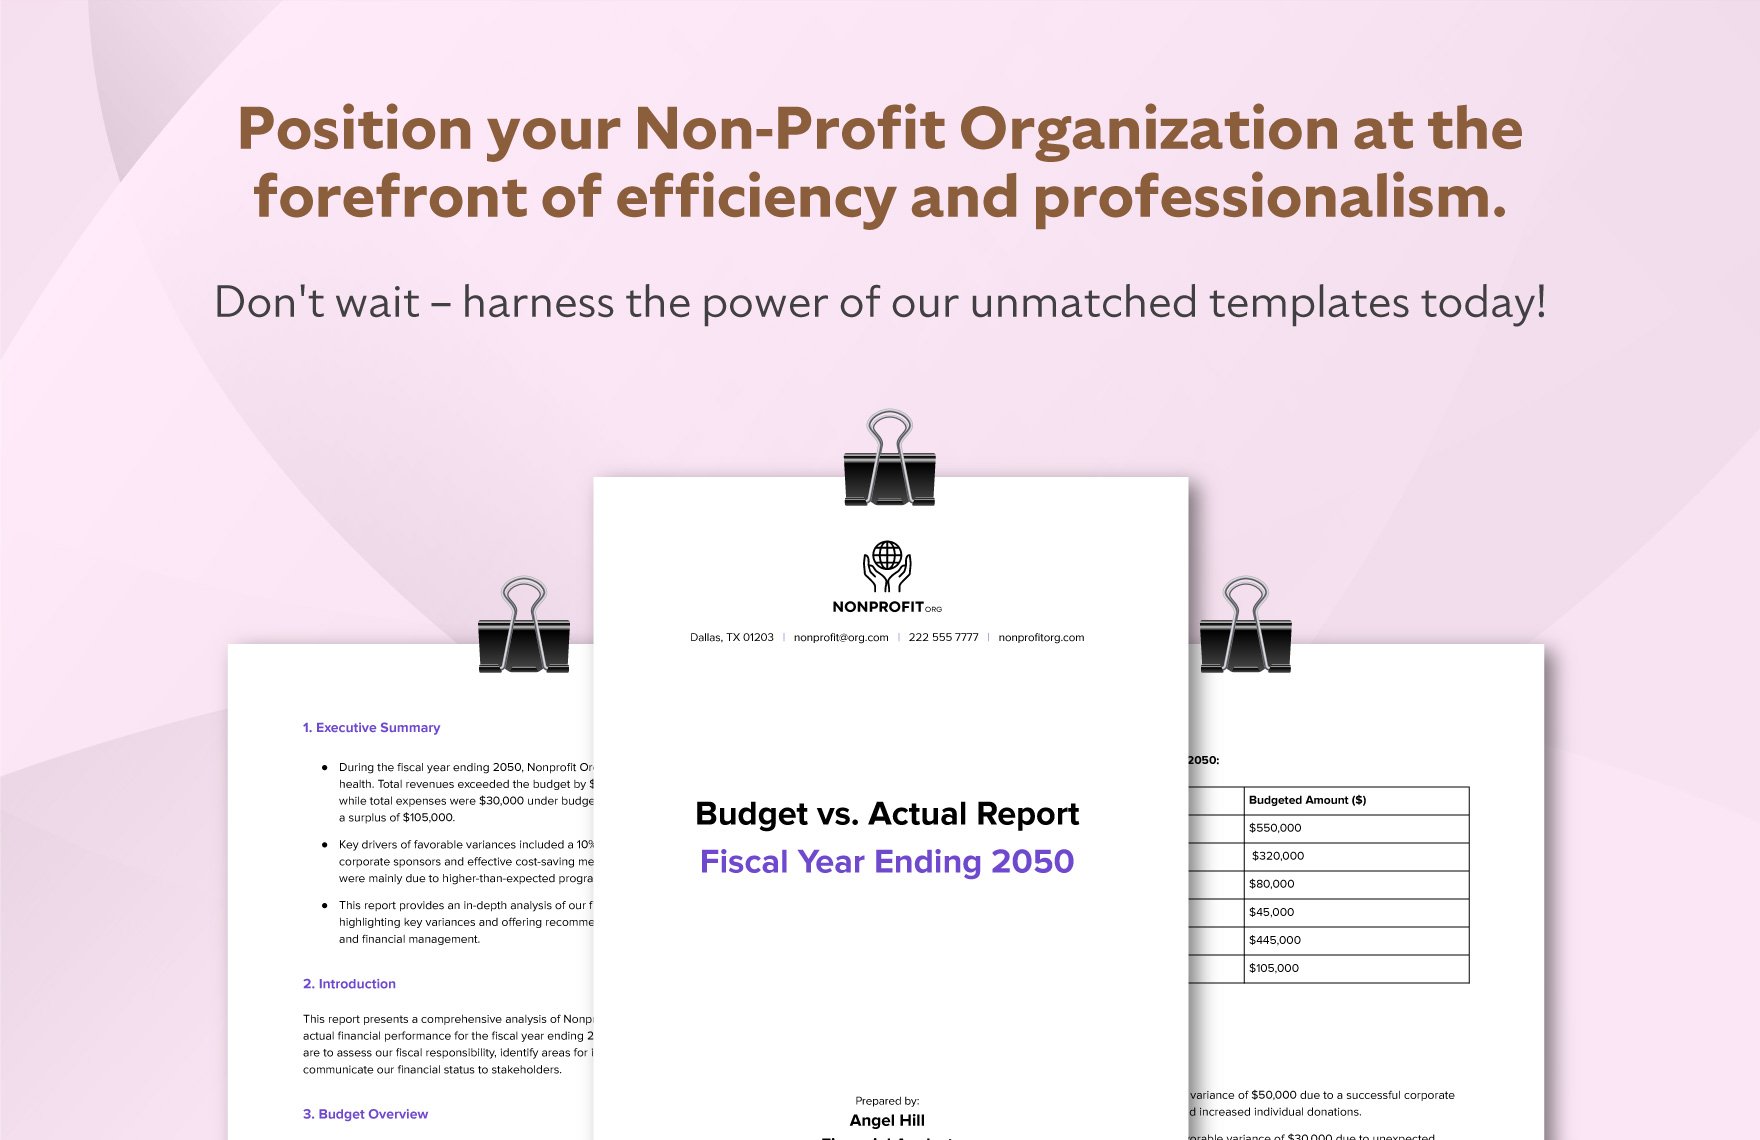 Nonprofit Organization Budget vs Actual Report Template